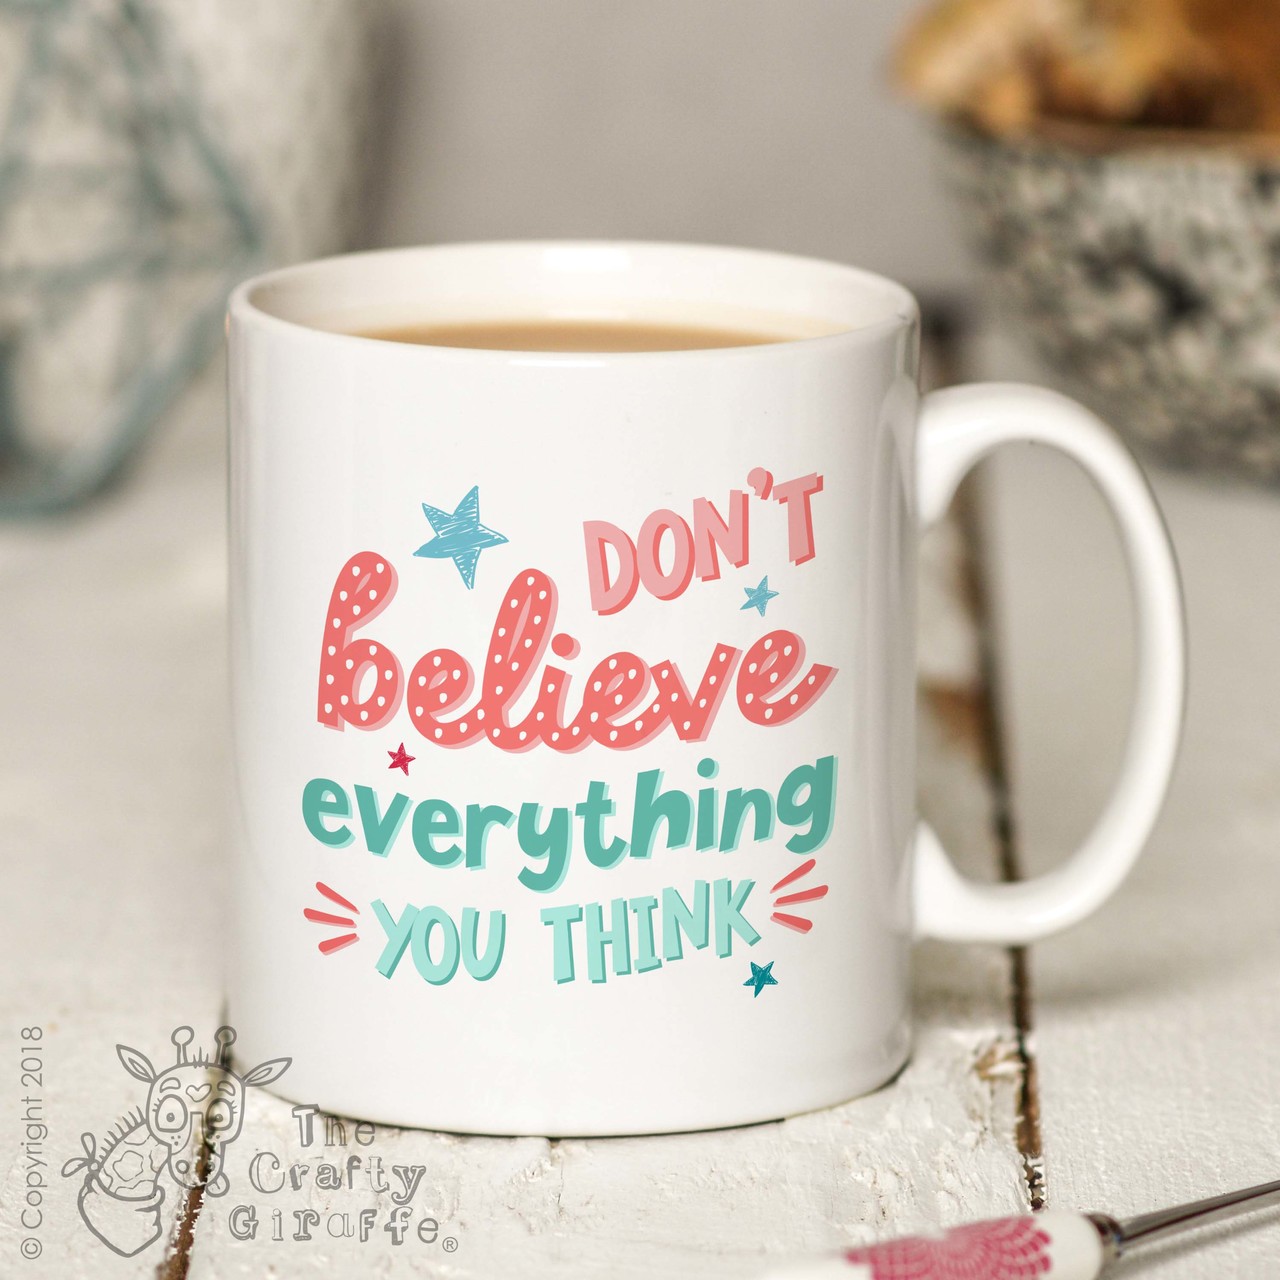 Don’t believe everything you think Mug